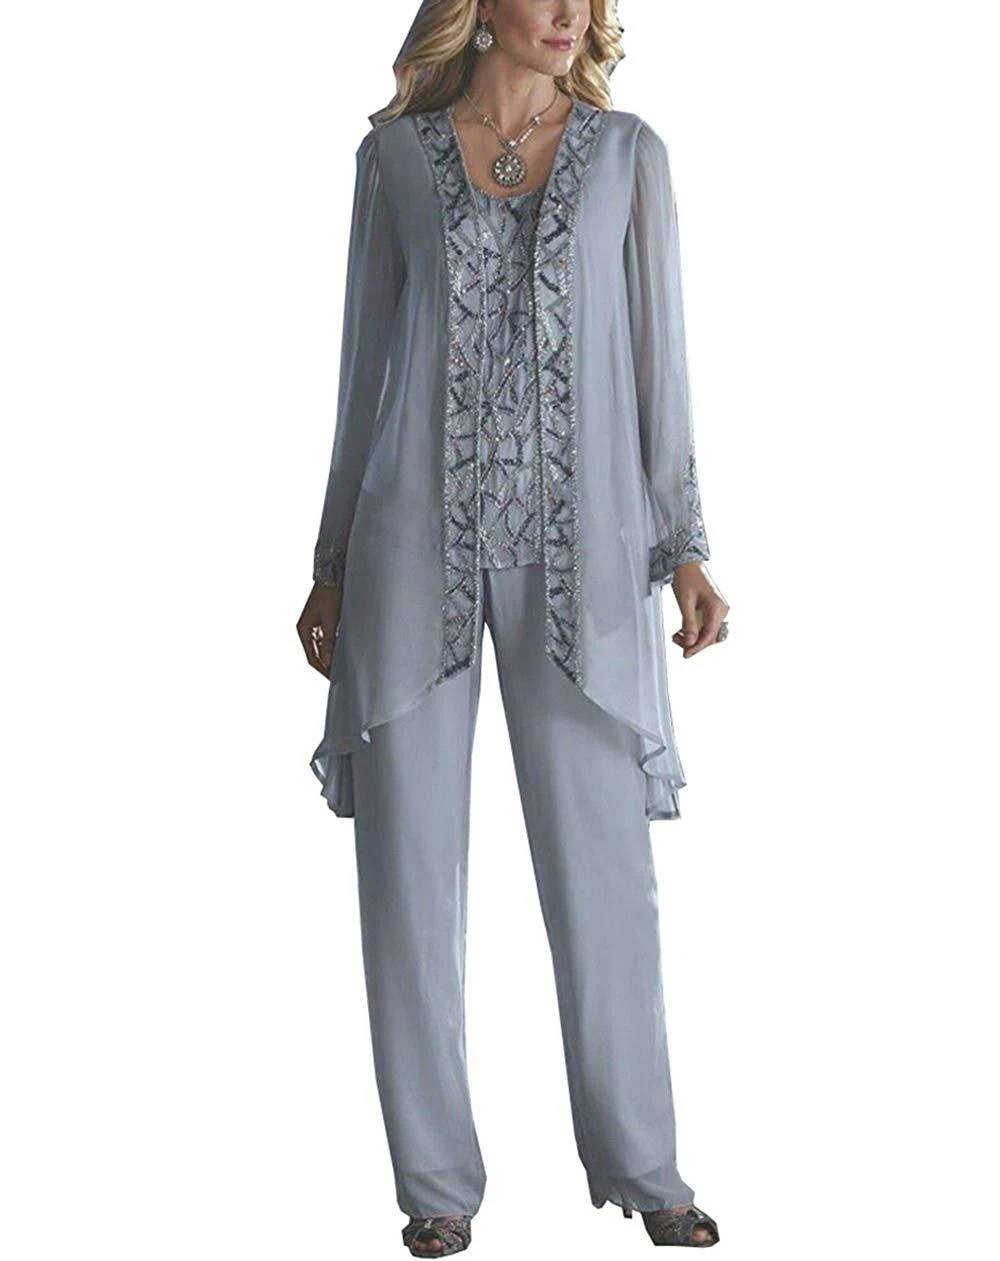 US $114.75 Beading women 3 piece elegant sequins chiffon mother of the bride dress pants suit floor length for wedding groom 2020